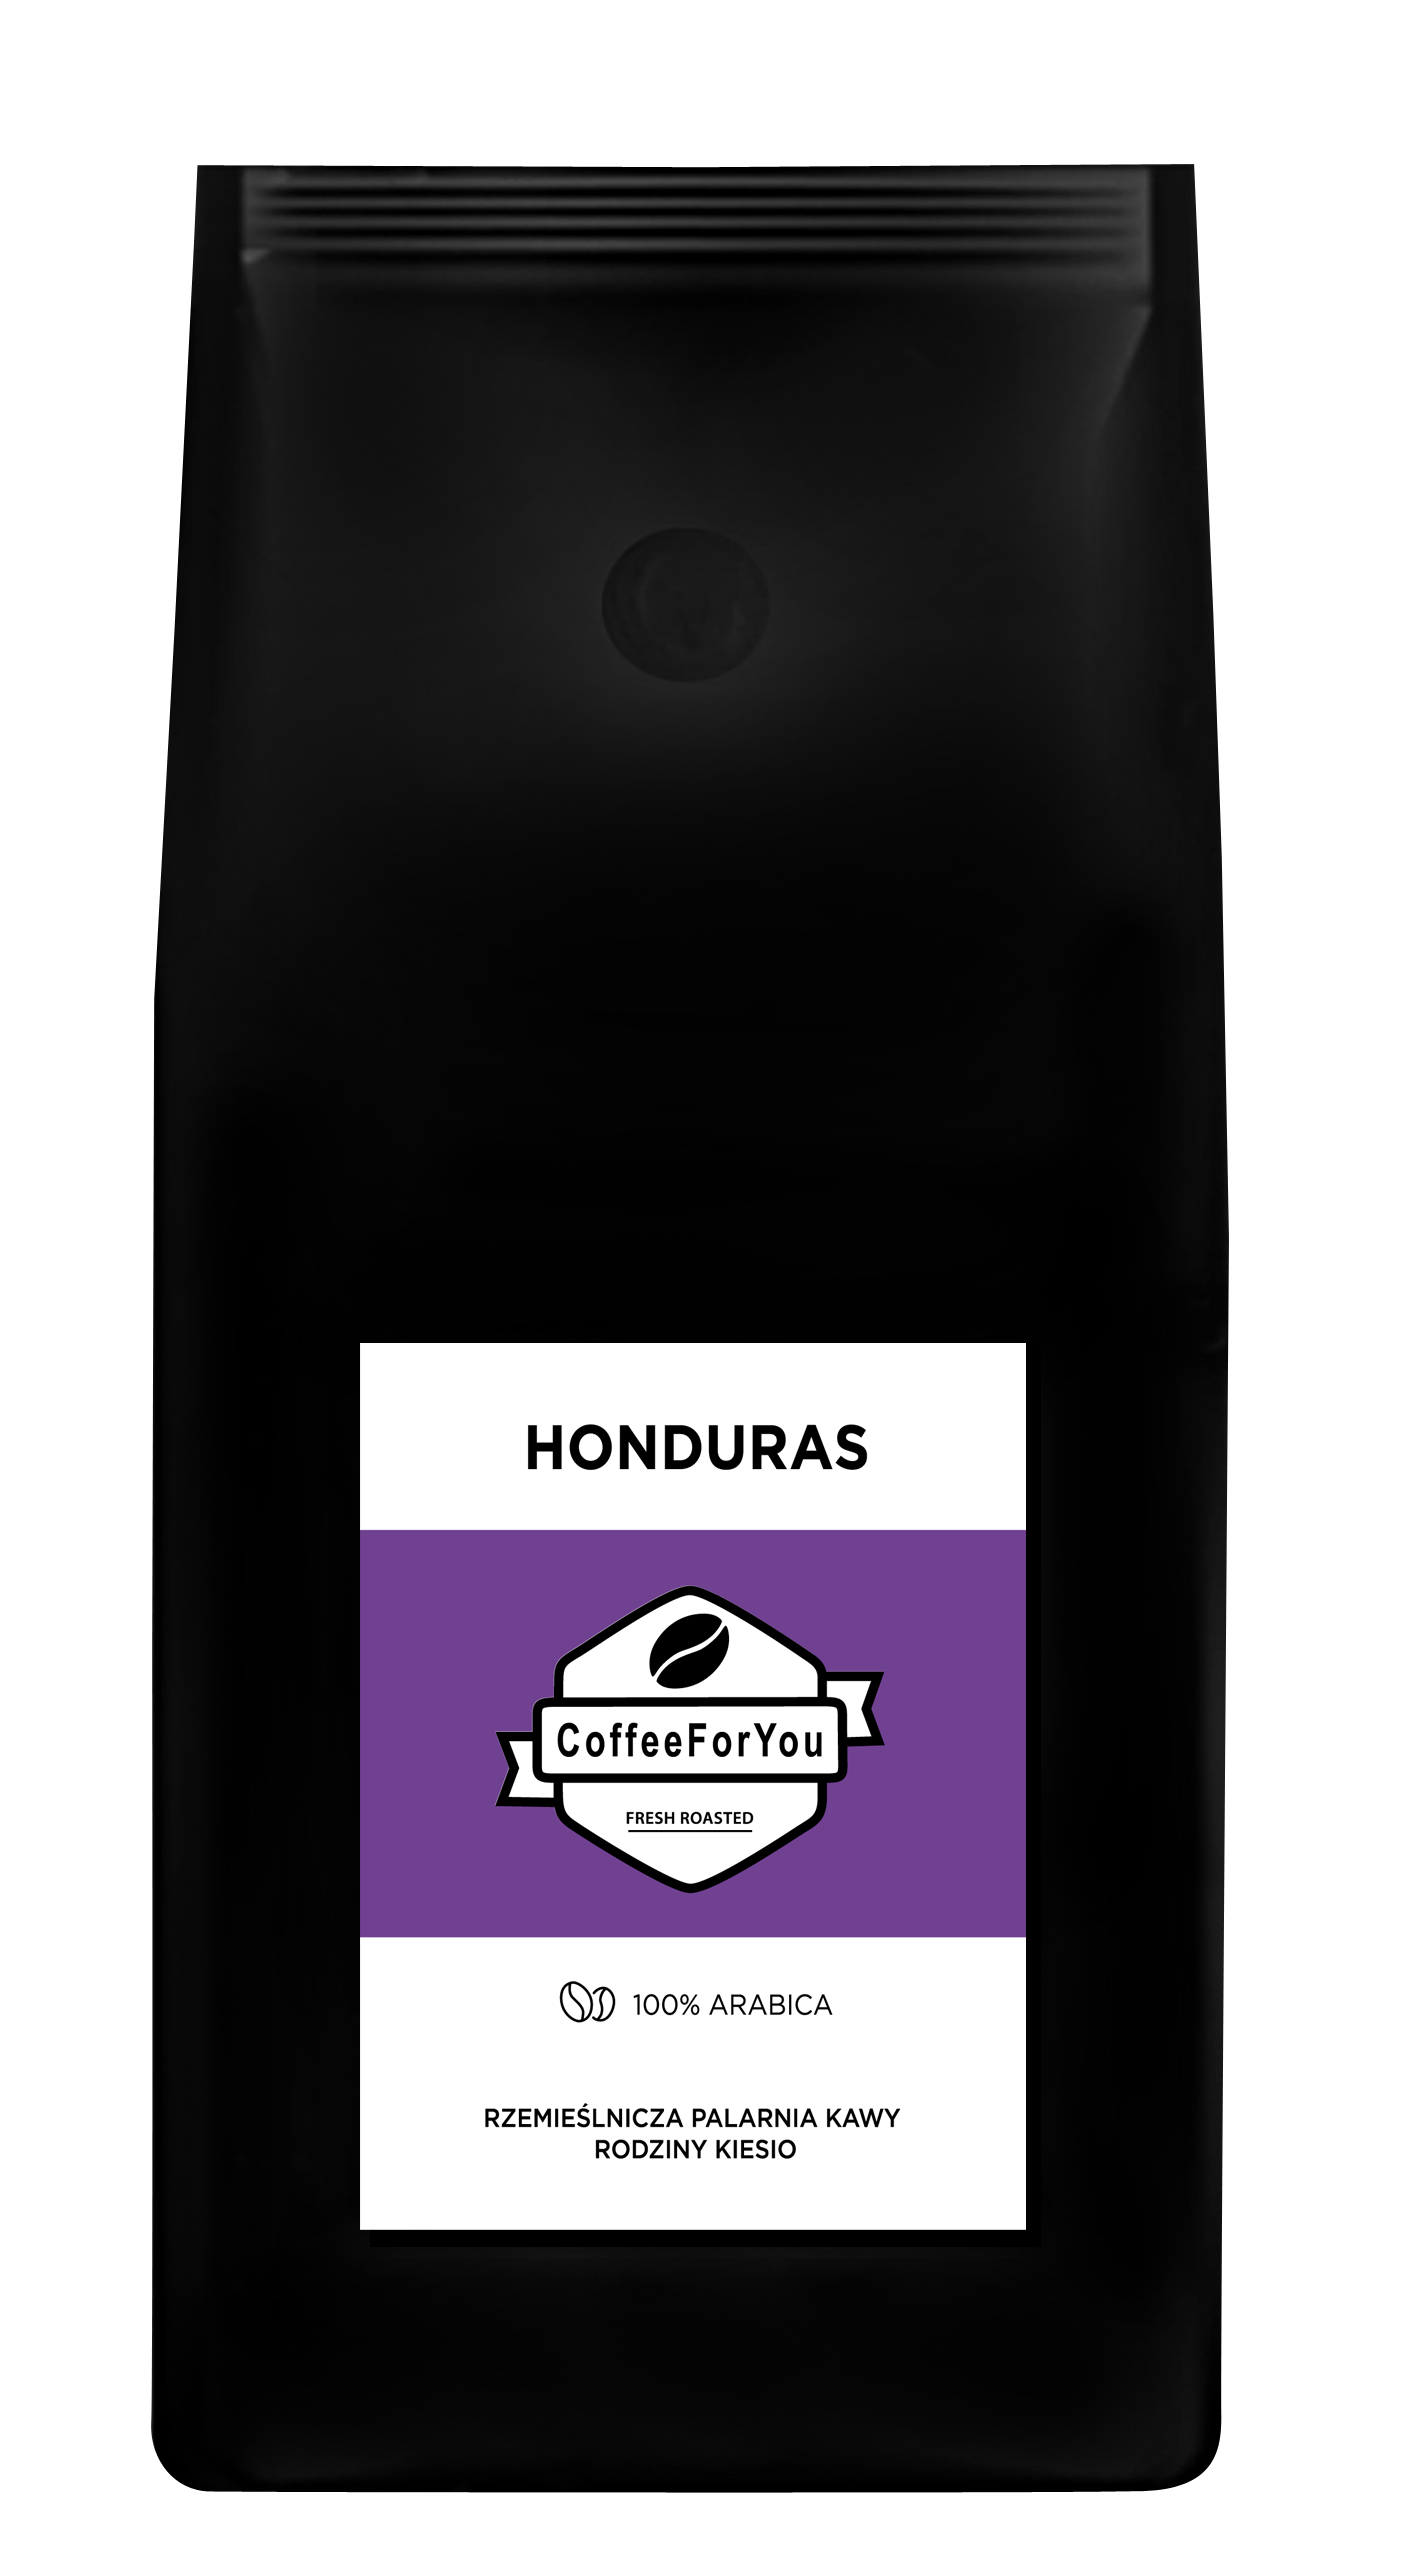 new_C4Y_3D_HONDURAS